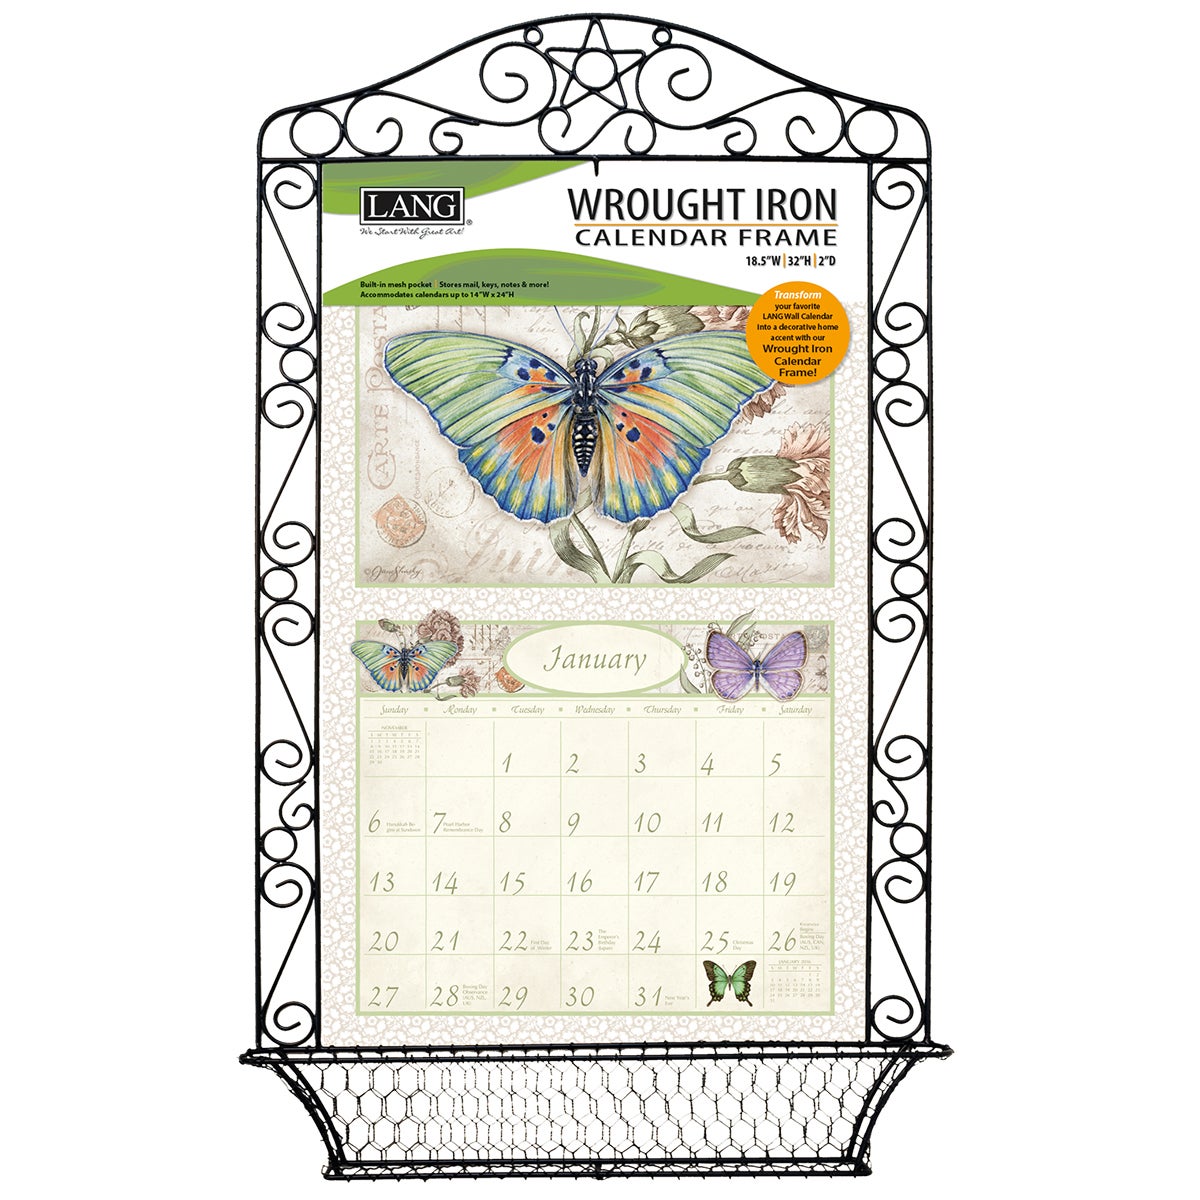 LANG Black Wrought Iron Calendar Frame